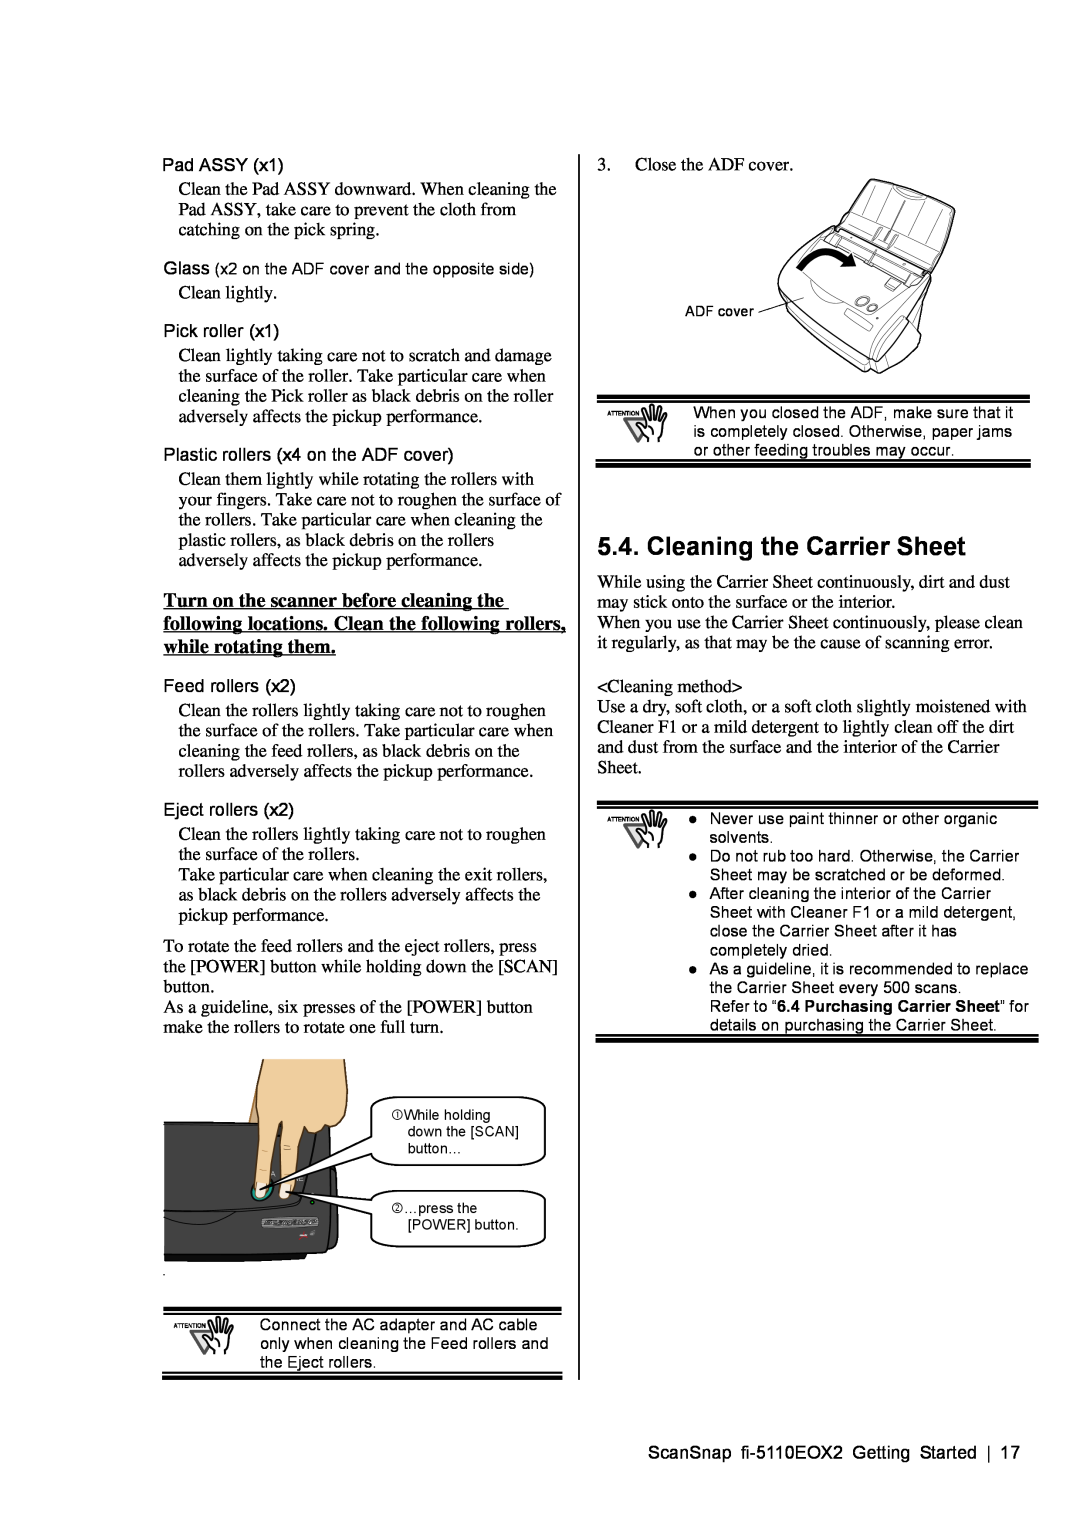 Fujitsu fi-5110EOX2 manual Cleaning the Carrier Sheet 